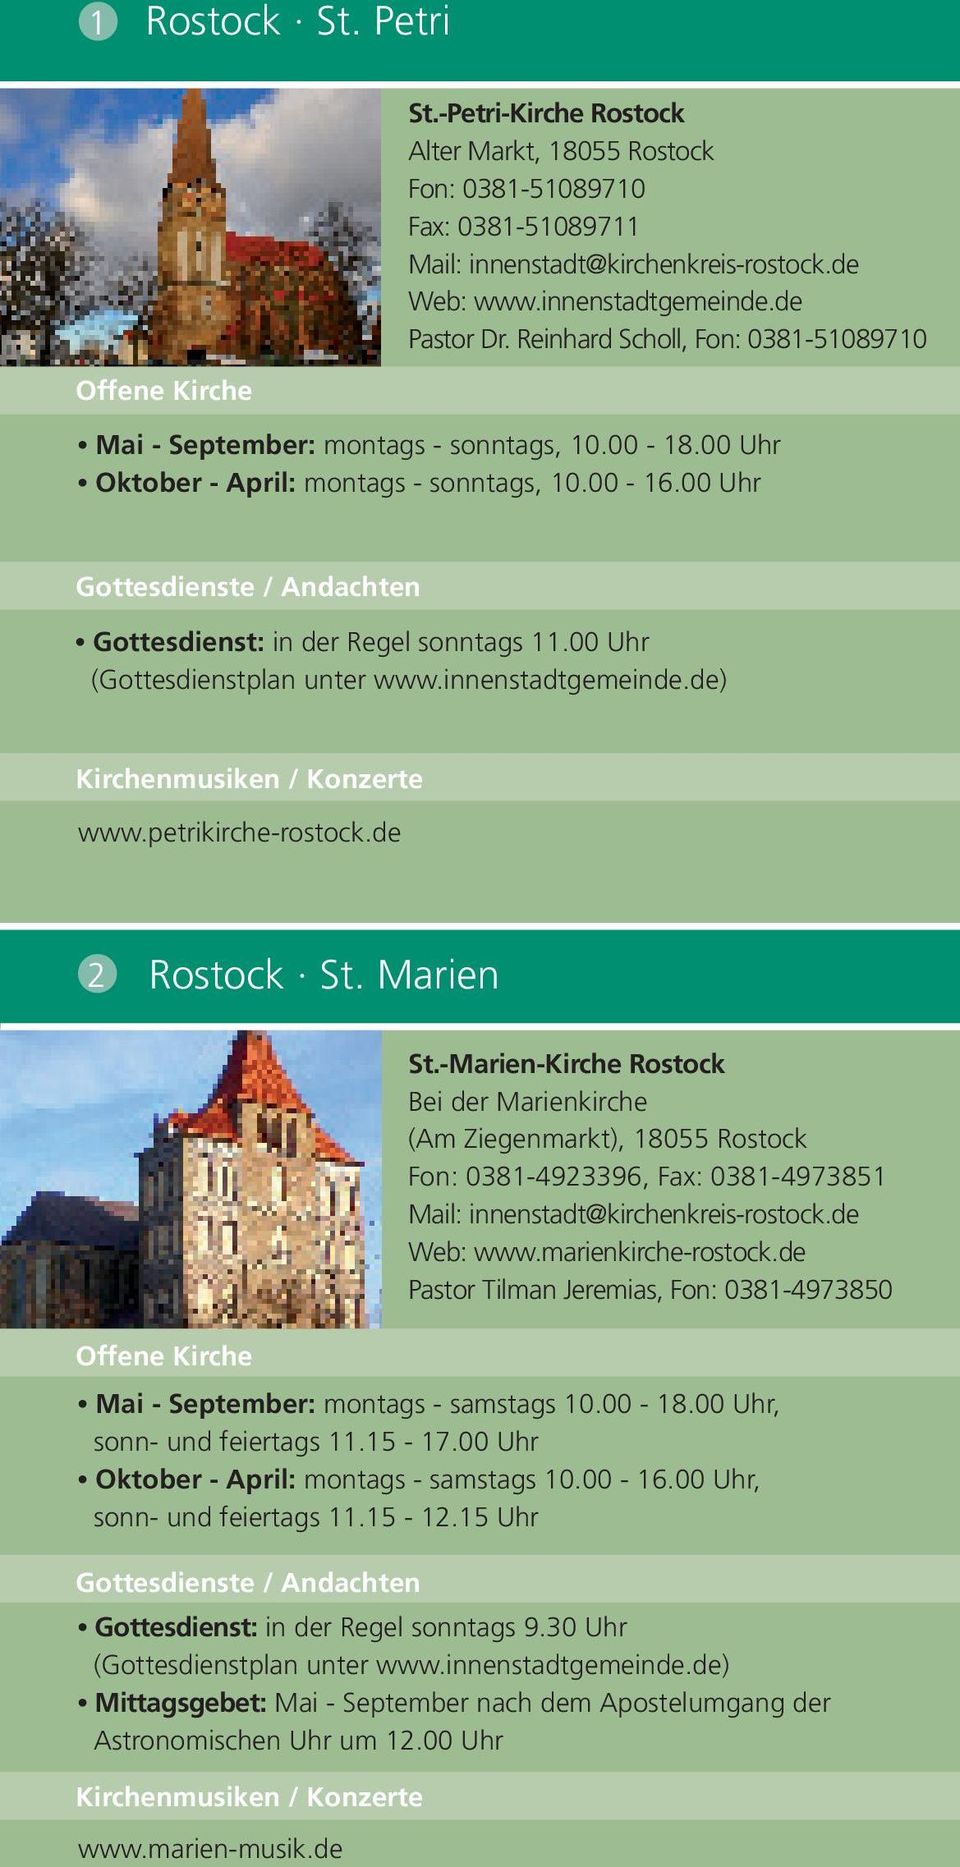 00 Uhr (Gottesdienstplan unter www.innenstadtgemeinde.de) www.petrikirche-rostock.de 2 Rostock St. Marien St.